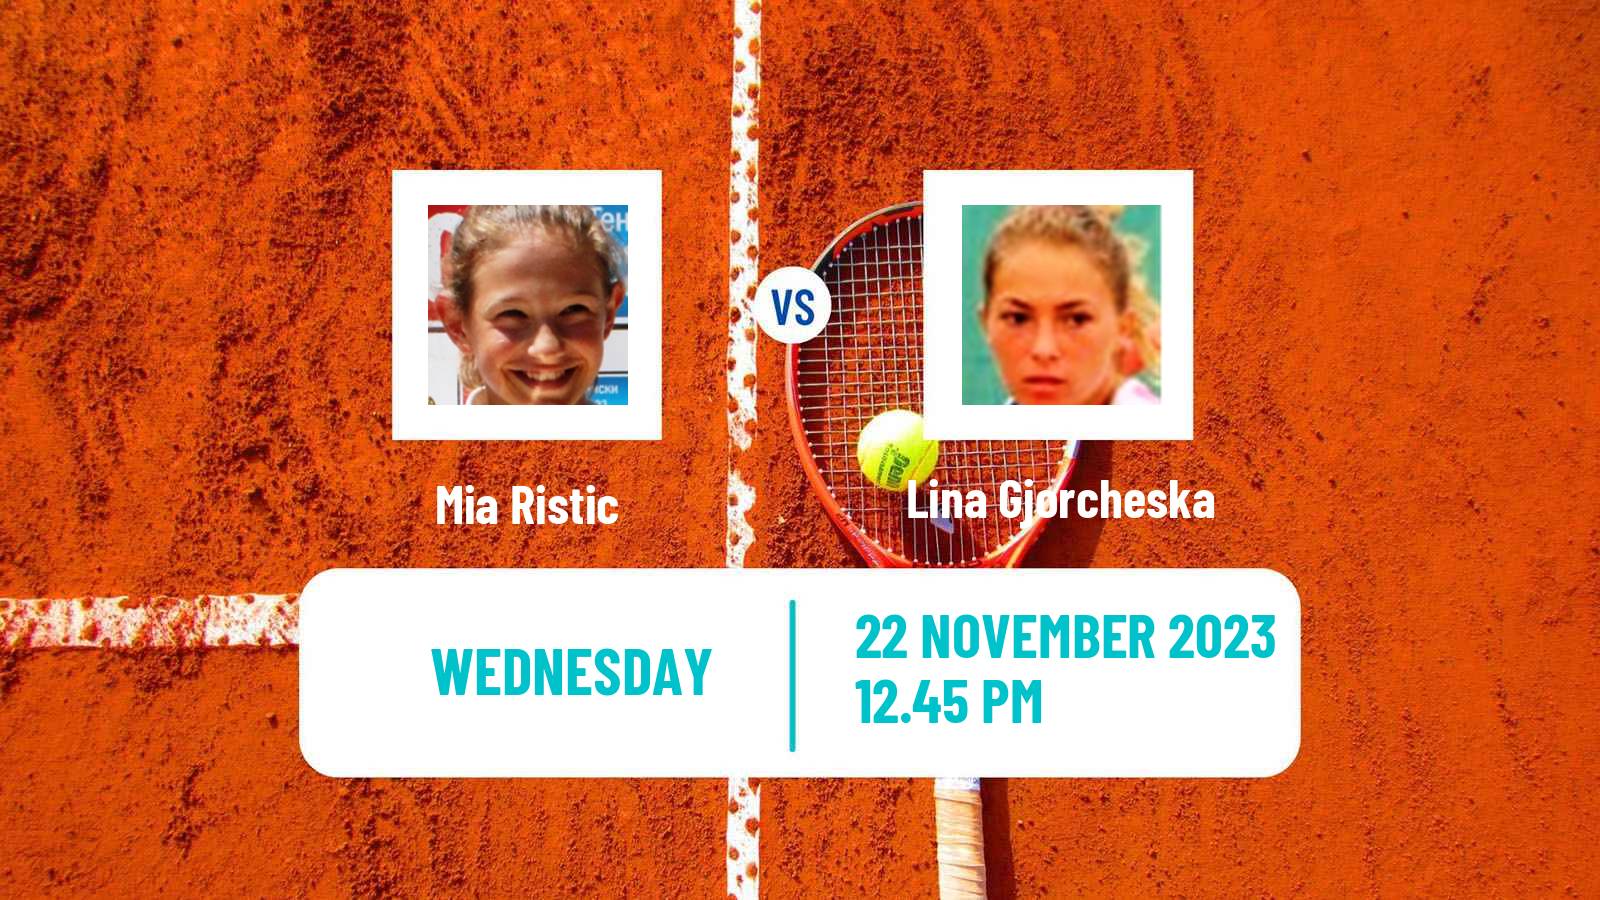 Tennis ITF W100 Valencia Women Mia Ristic - Lina Gjorcheska